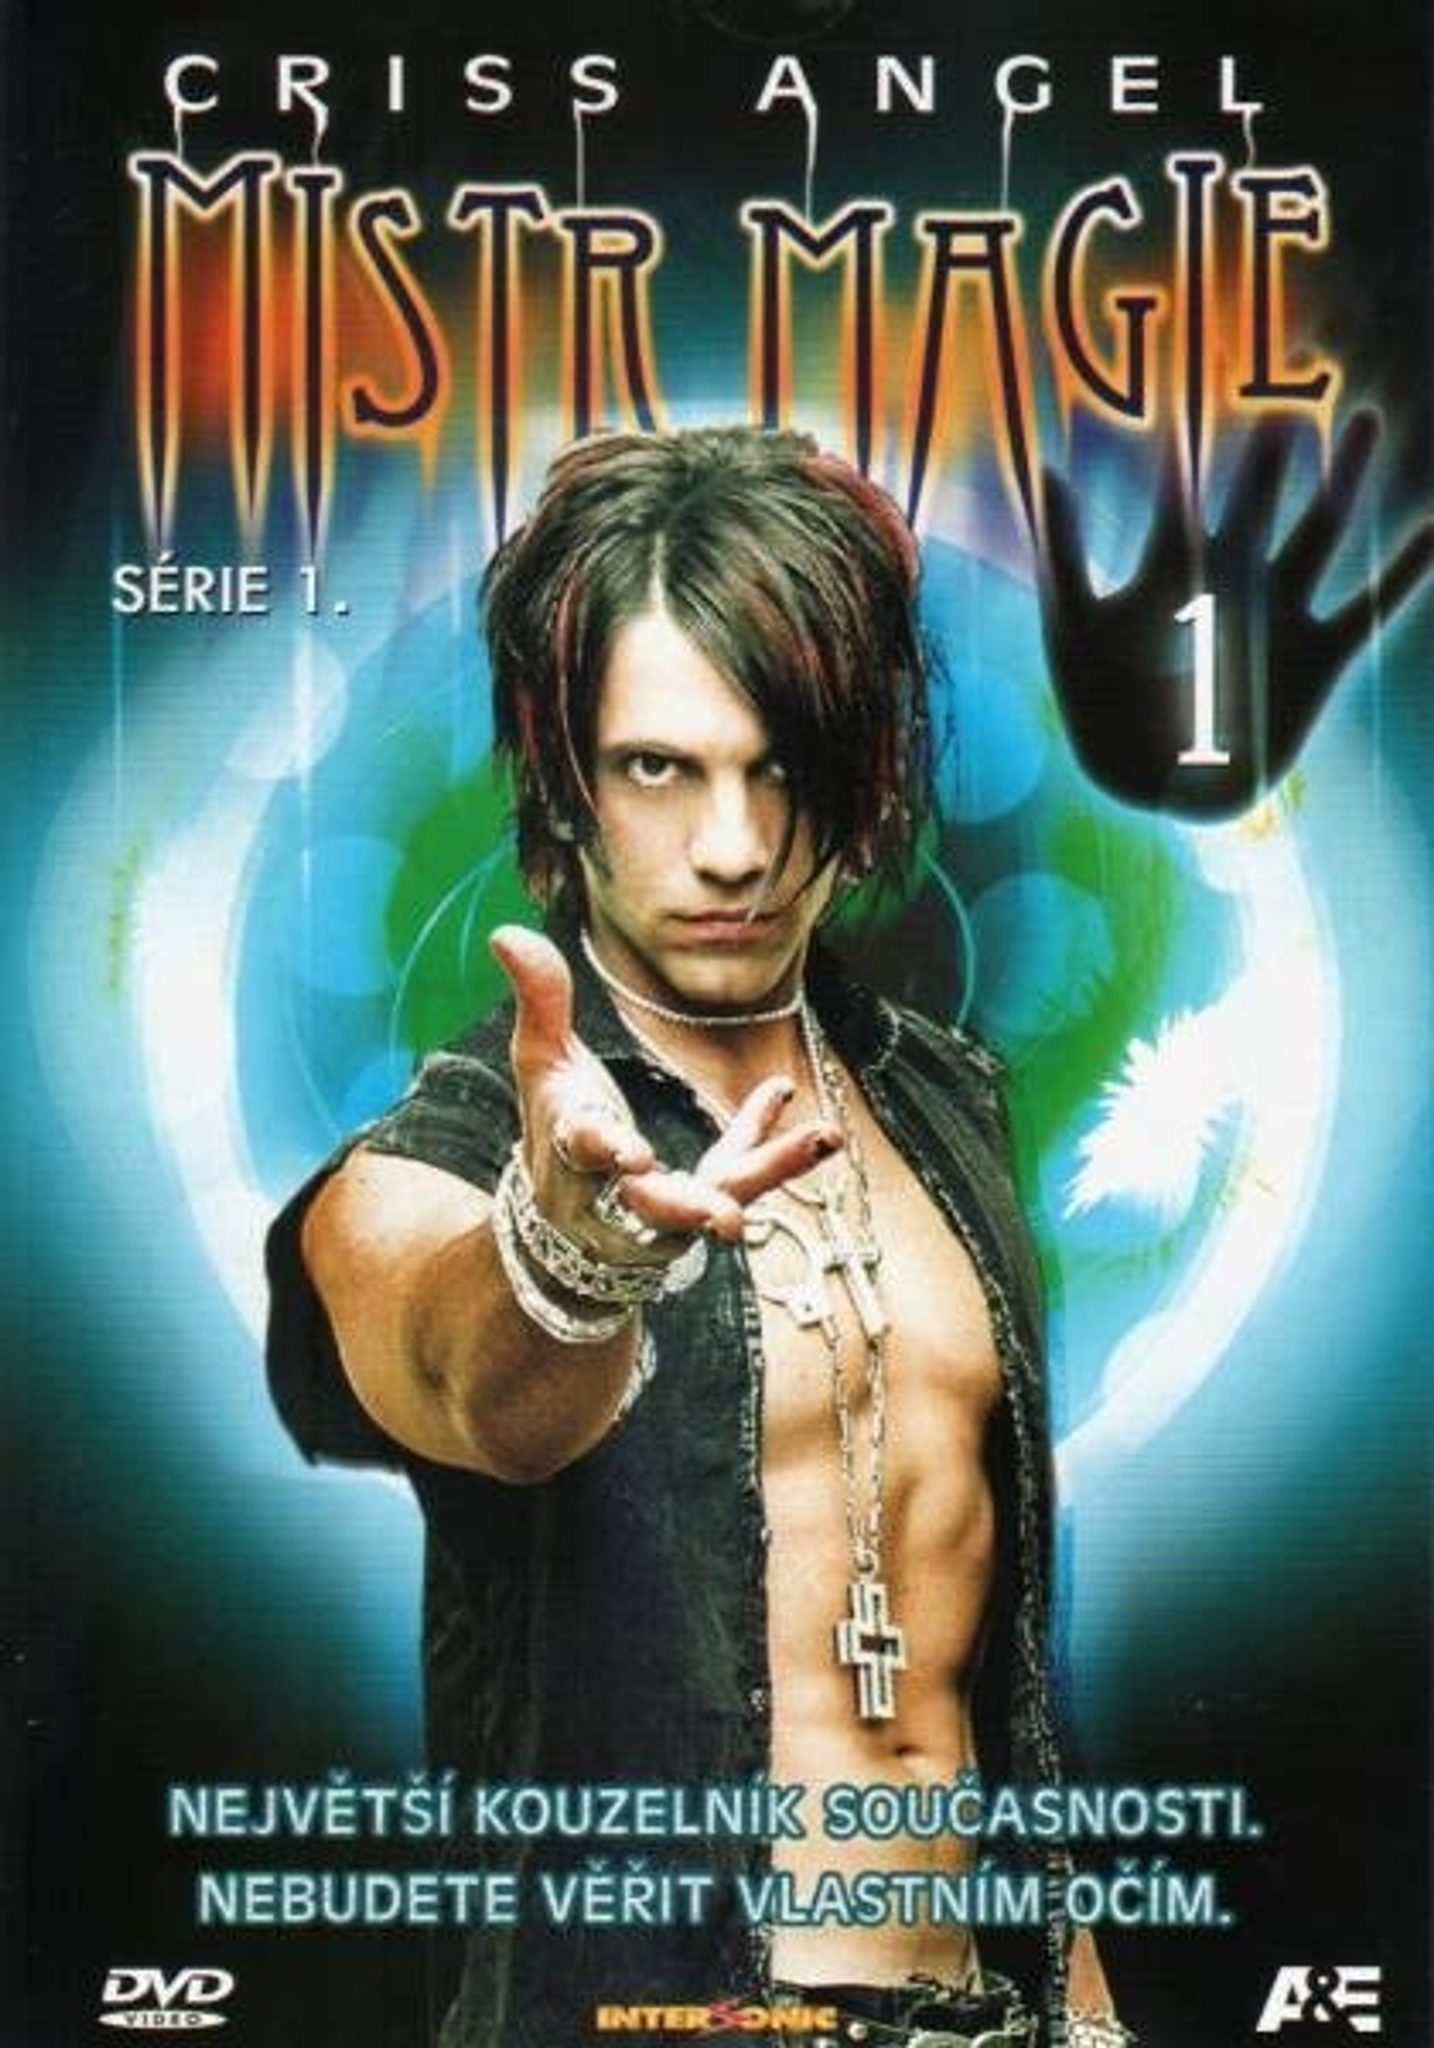 DVD Criss Angel Mistr magie srie 1 1 - Kliknutm na obrzek zavete